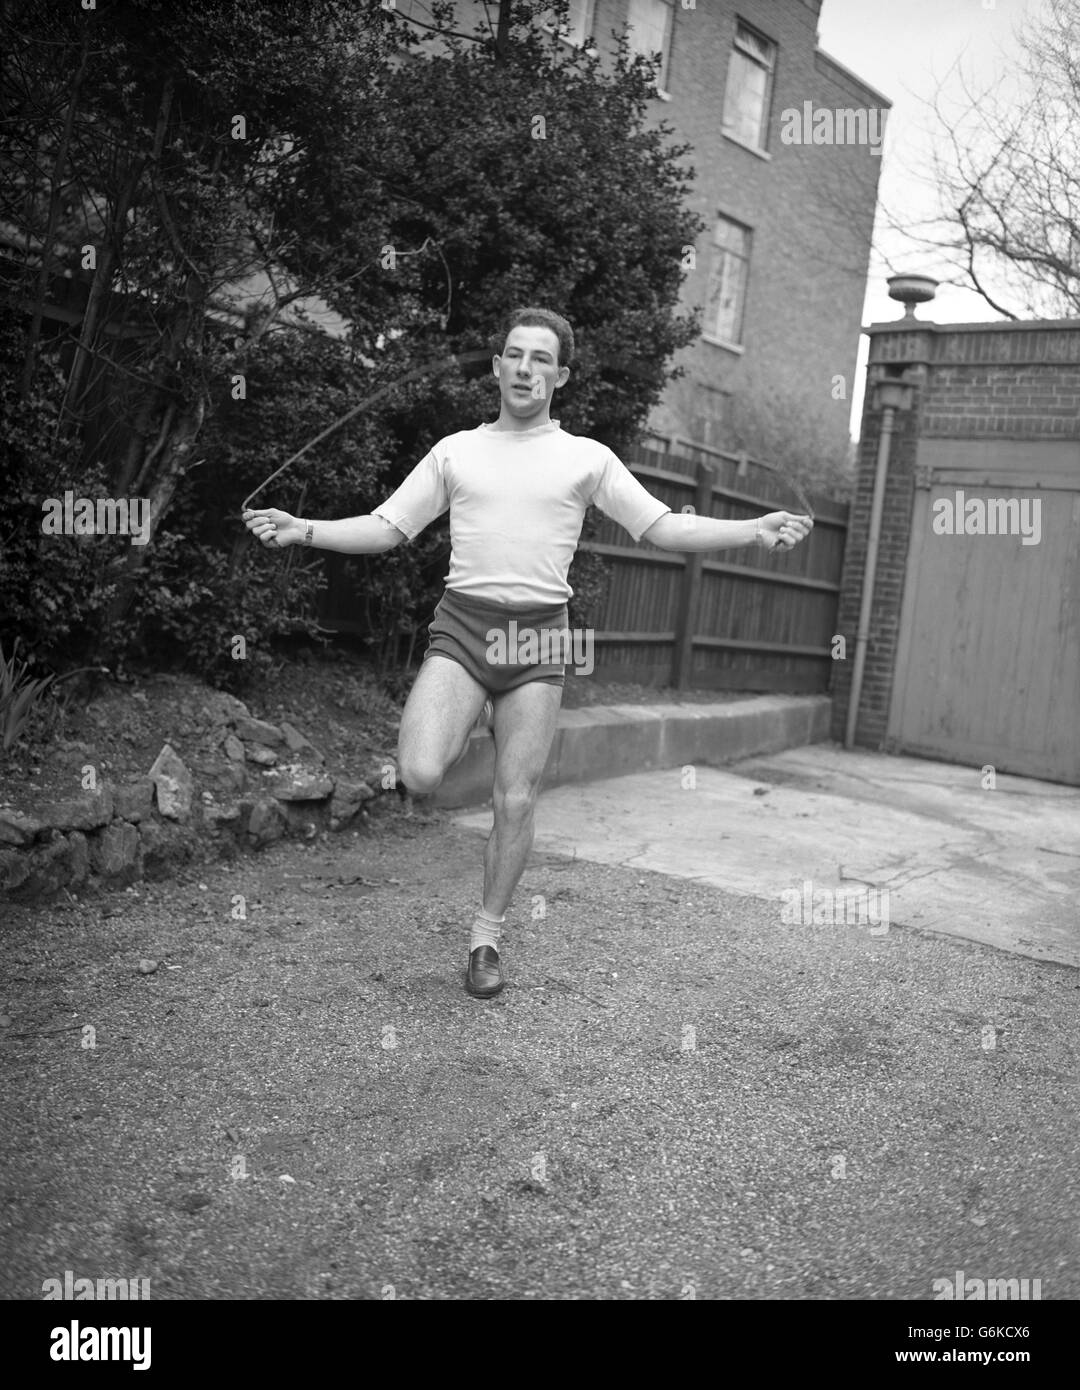 Motor Racing - Stirling Moss - Hampstead Flat, Londra. Il pilota britannico Stirling Moss salta al suo appartamento Hampstead a Londra. Foto Stock